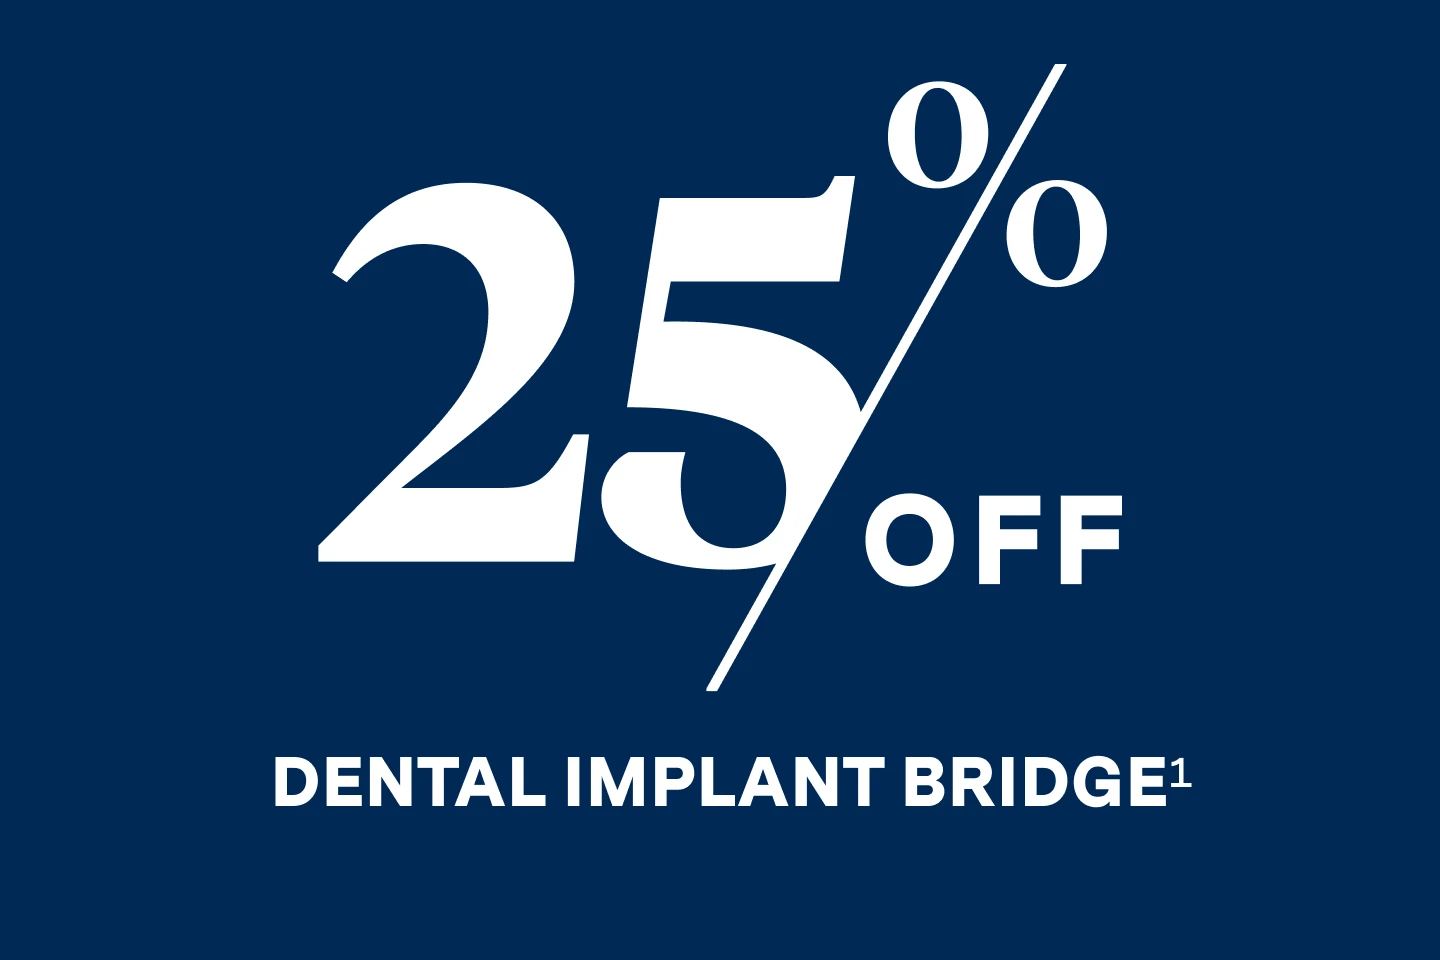 25% off dental implant bridge. 